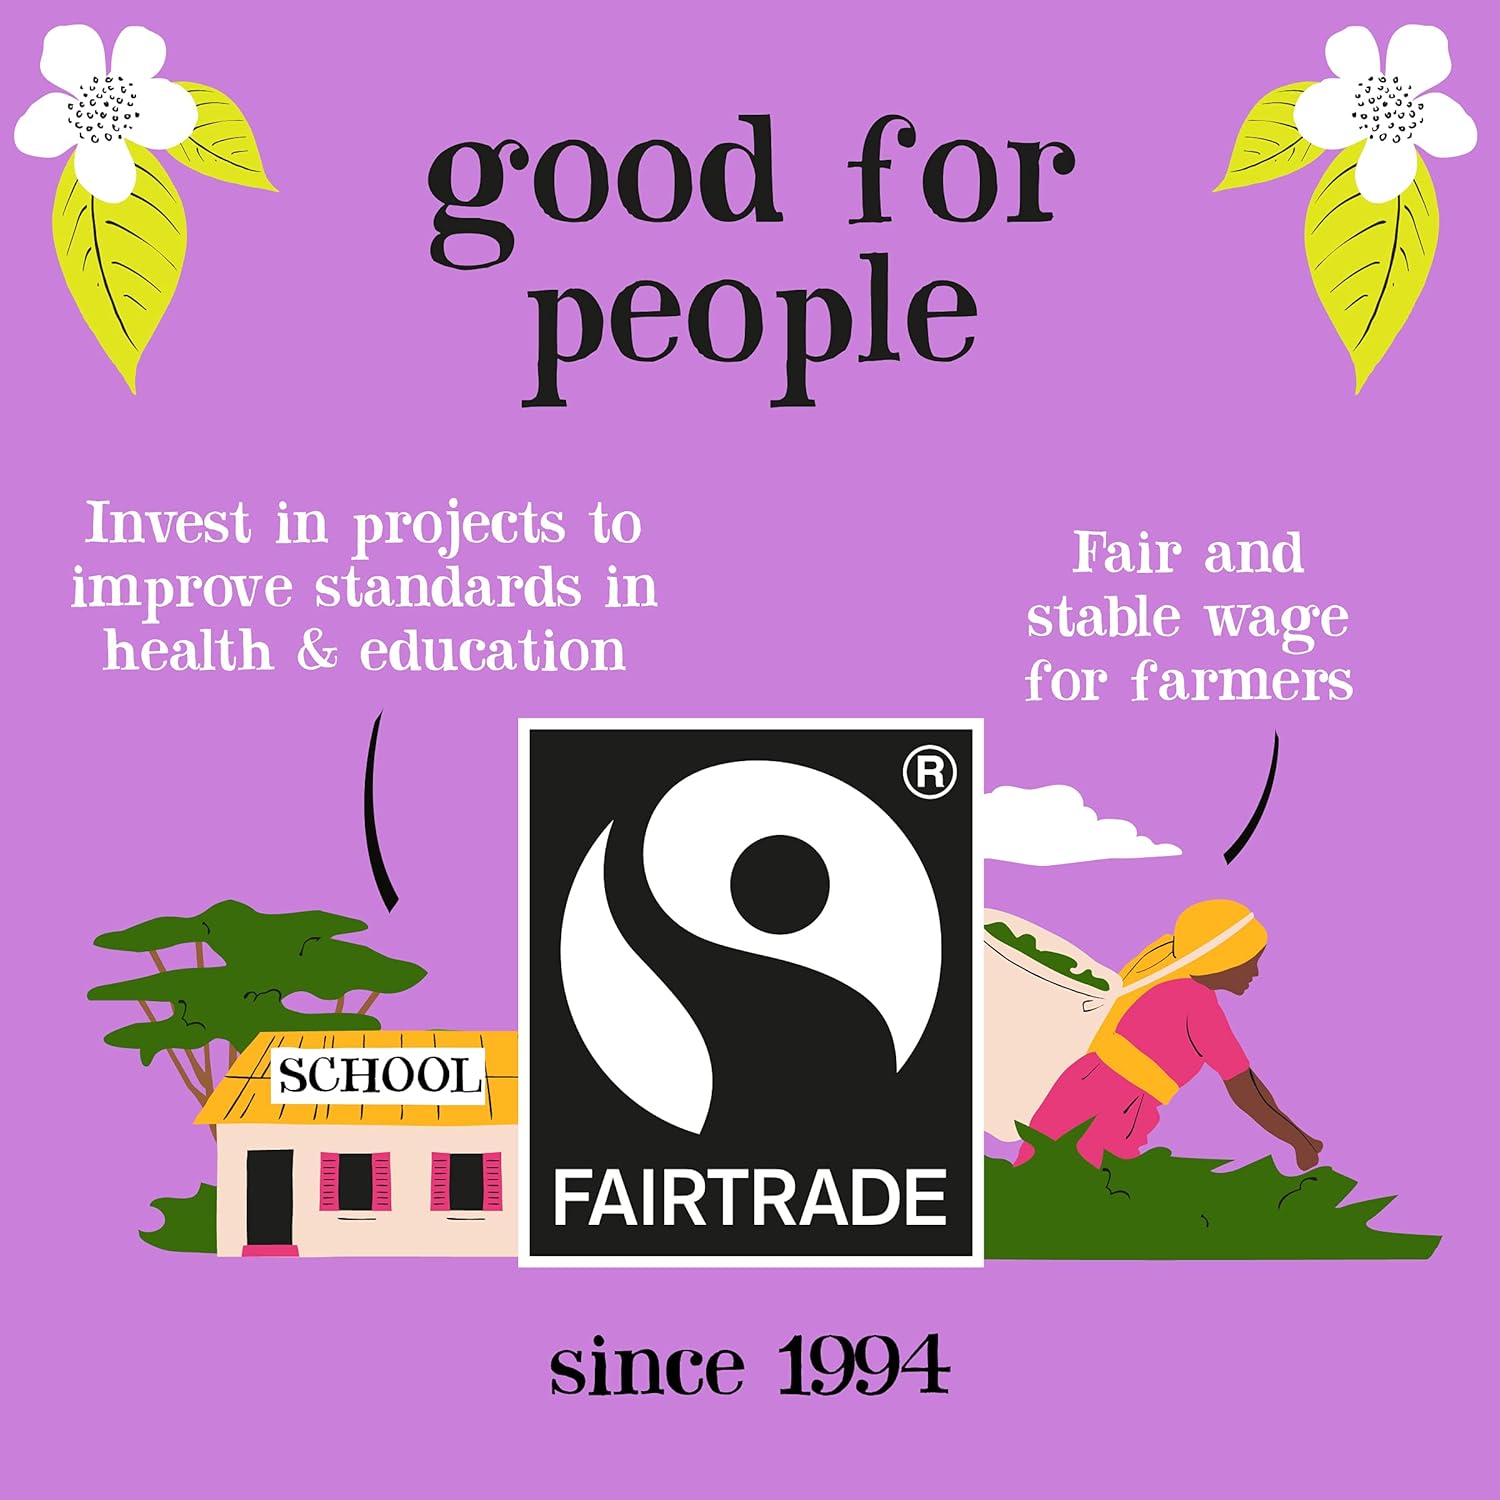 Organic Fairtrade Everyday Decaf Tea 40 bags